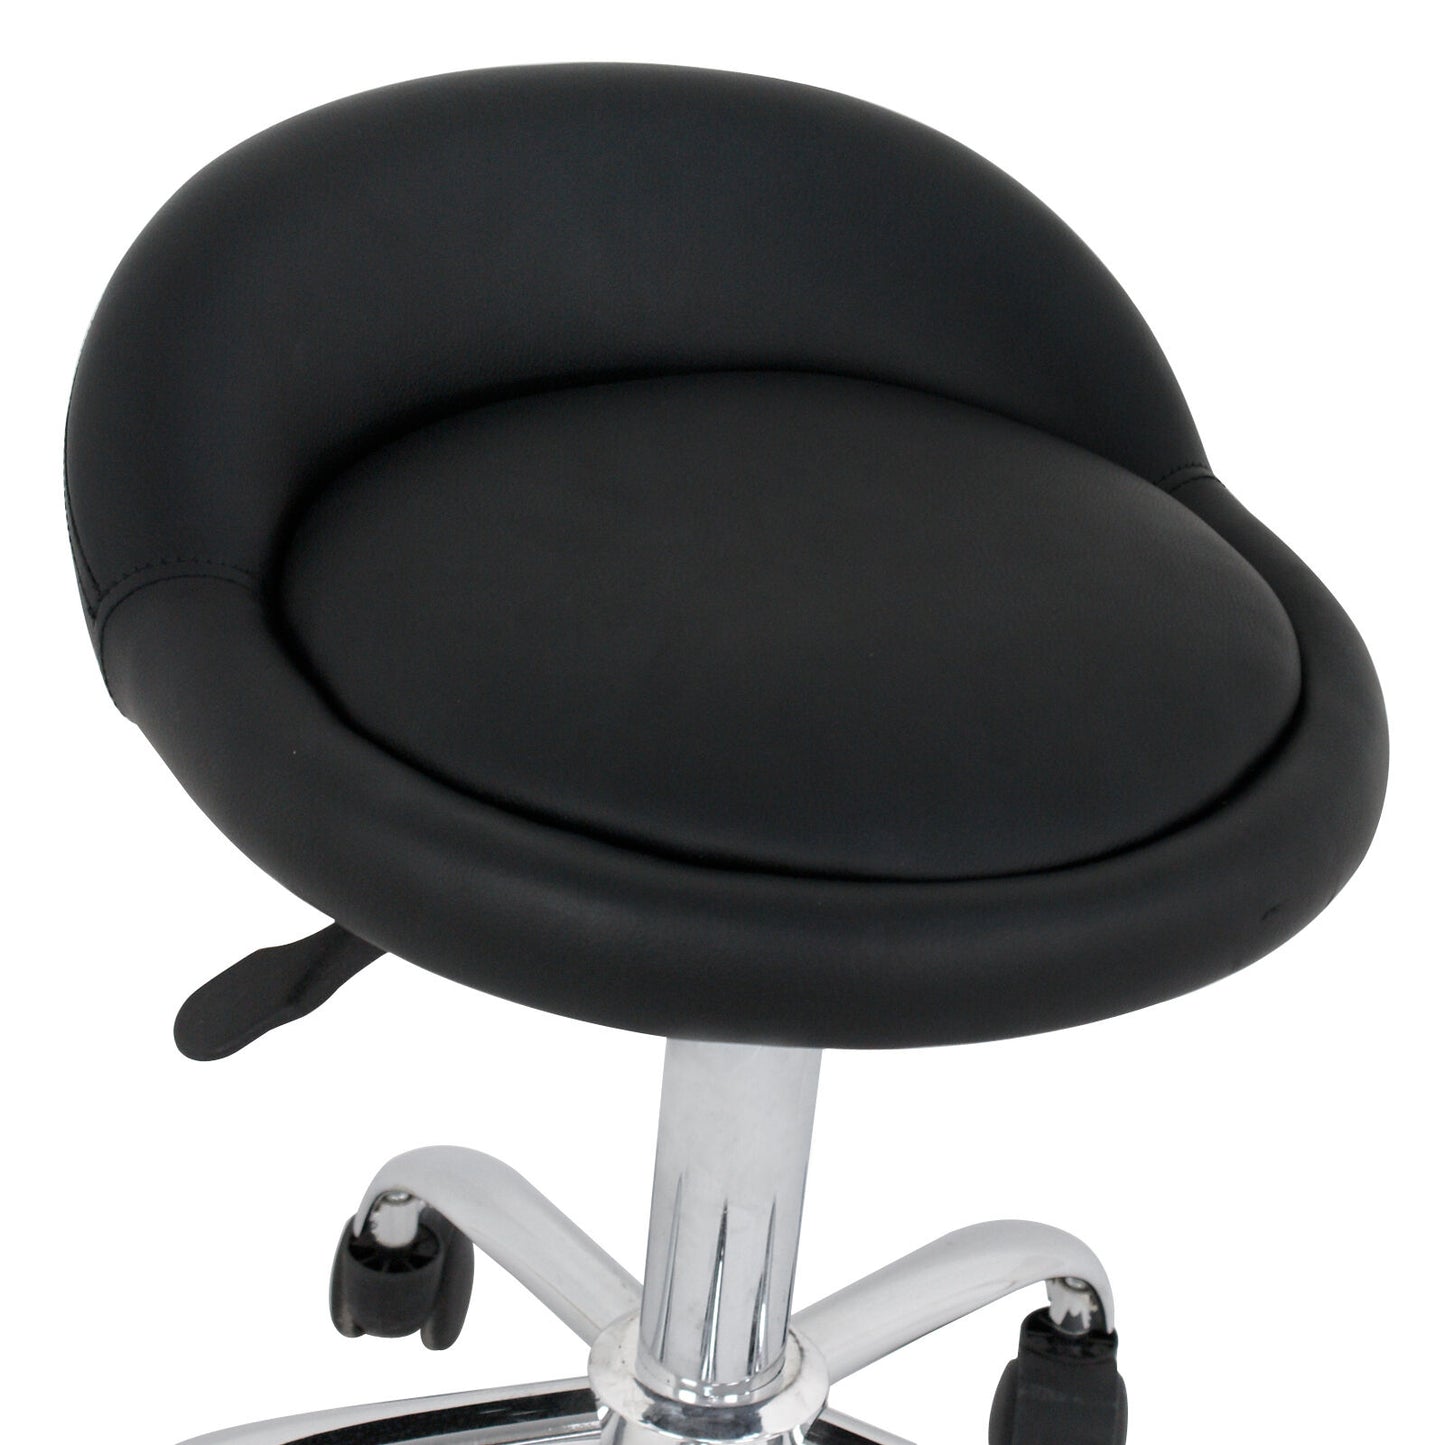 Rolling Salon Stool Adjustable Hydraulic Tattoo Facial Massage Spa Chair w/Back